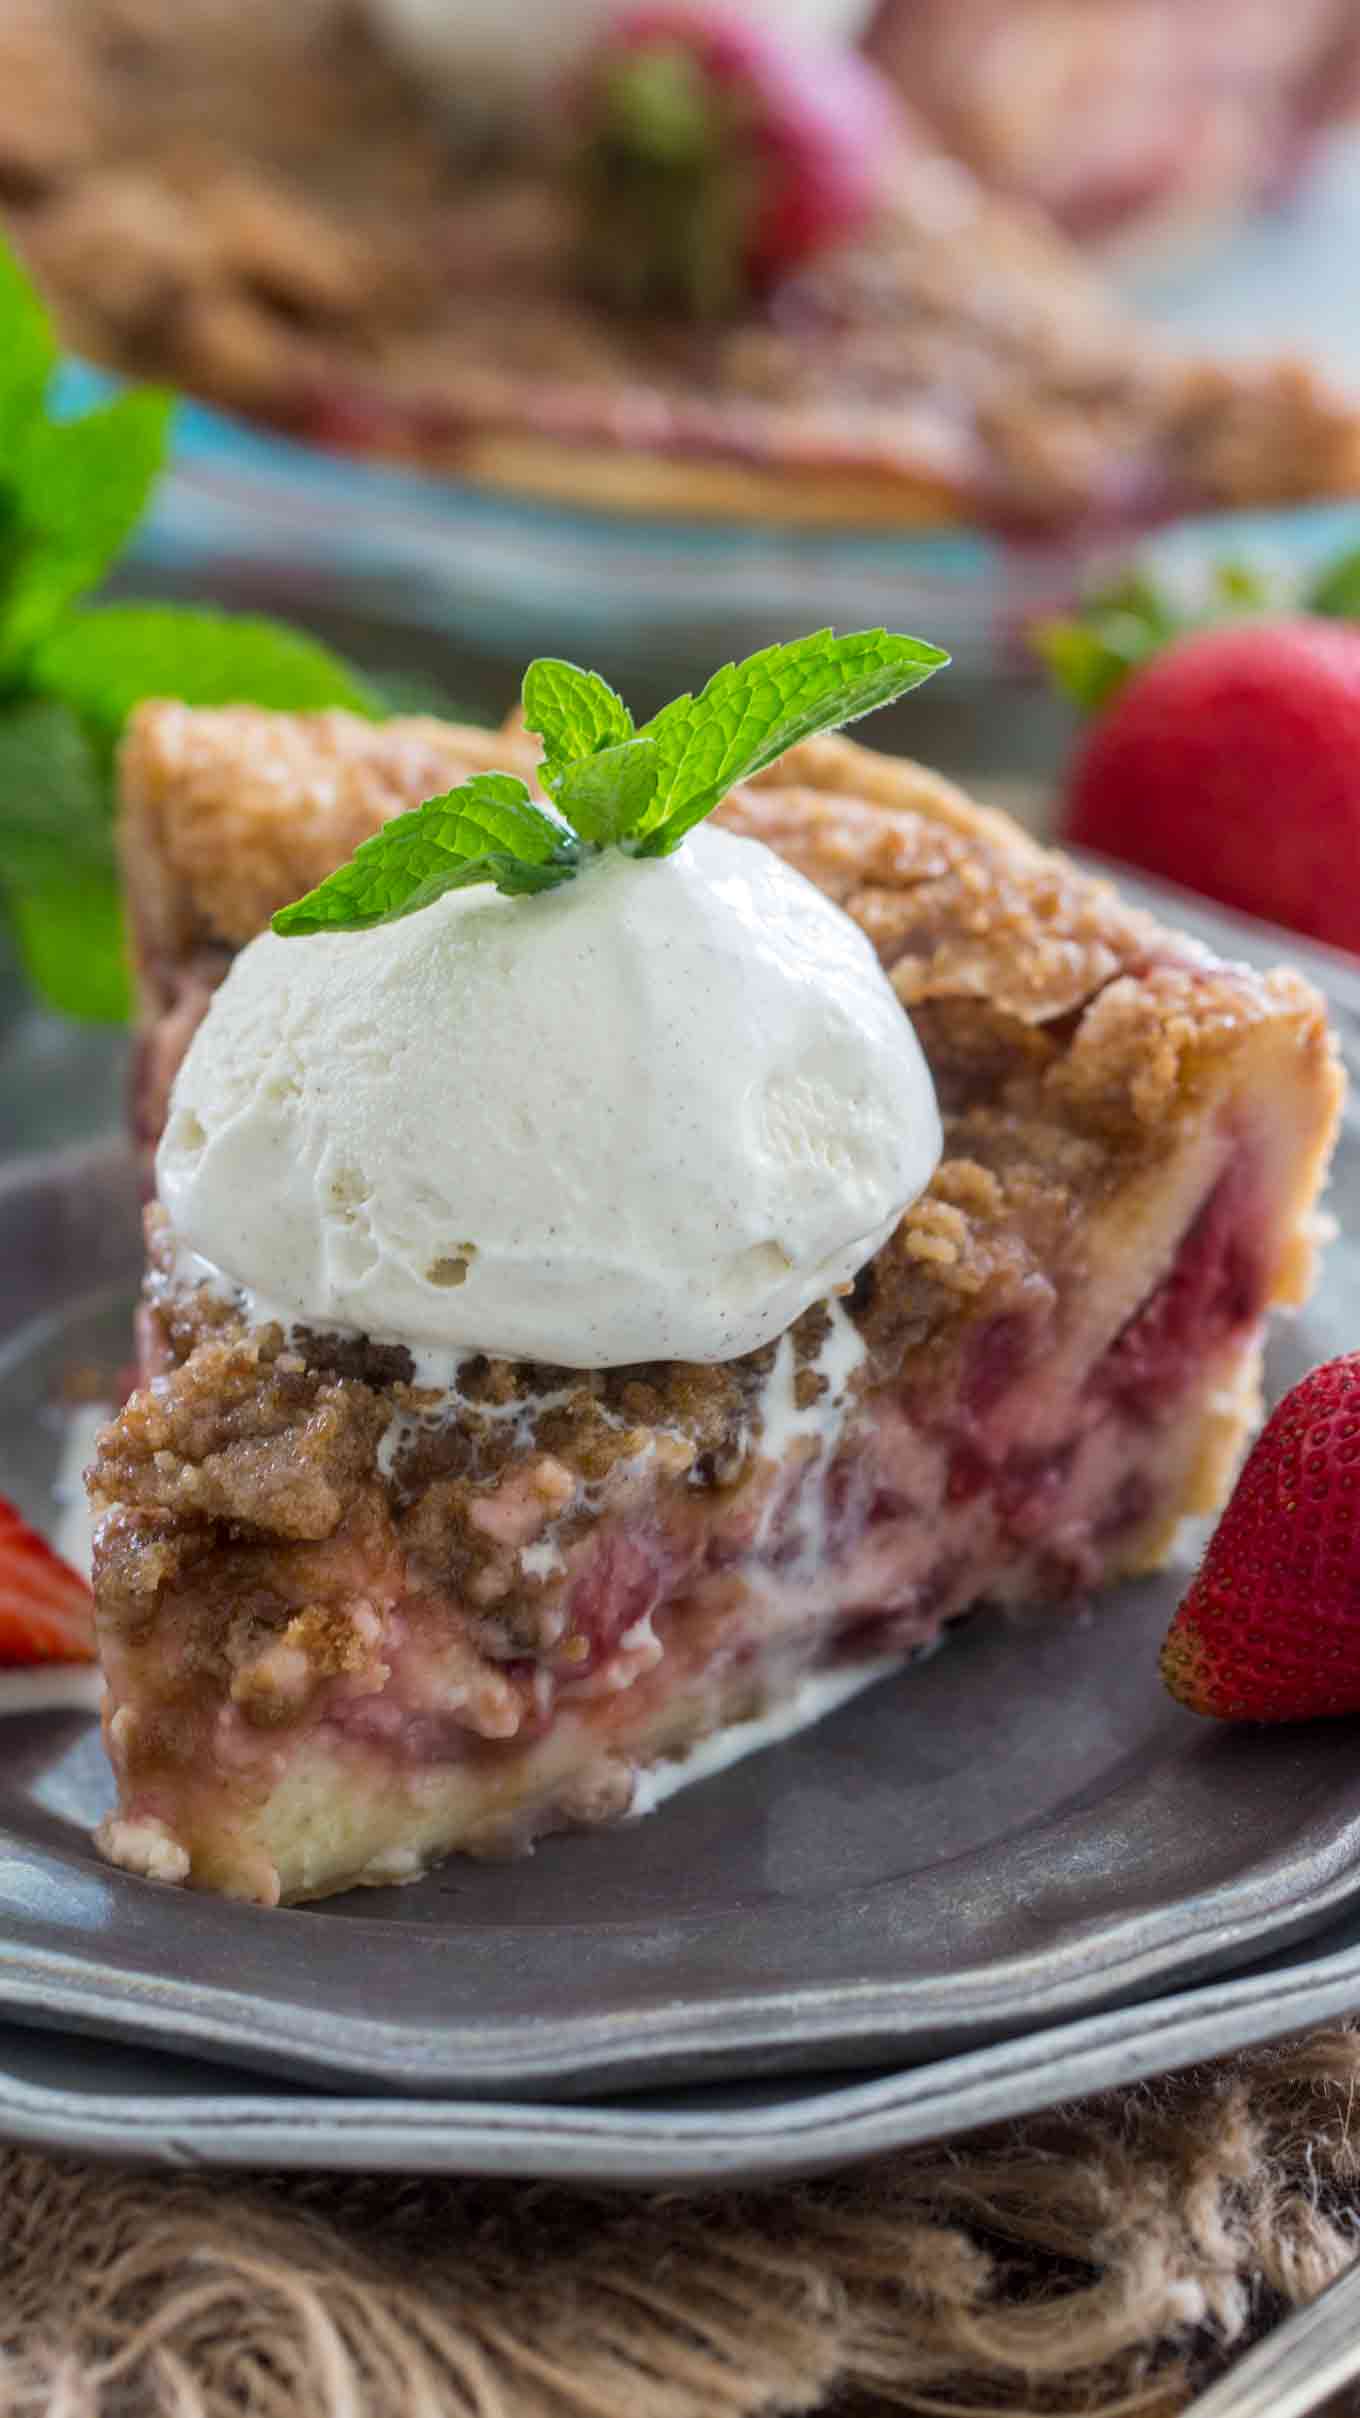 Creamy Strawberry Pie Recipe